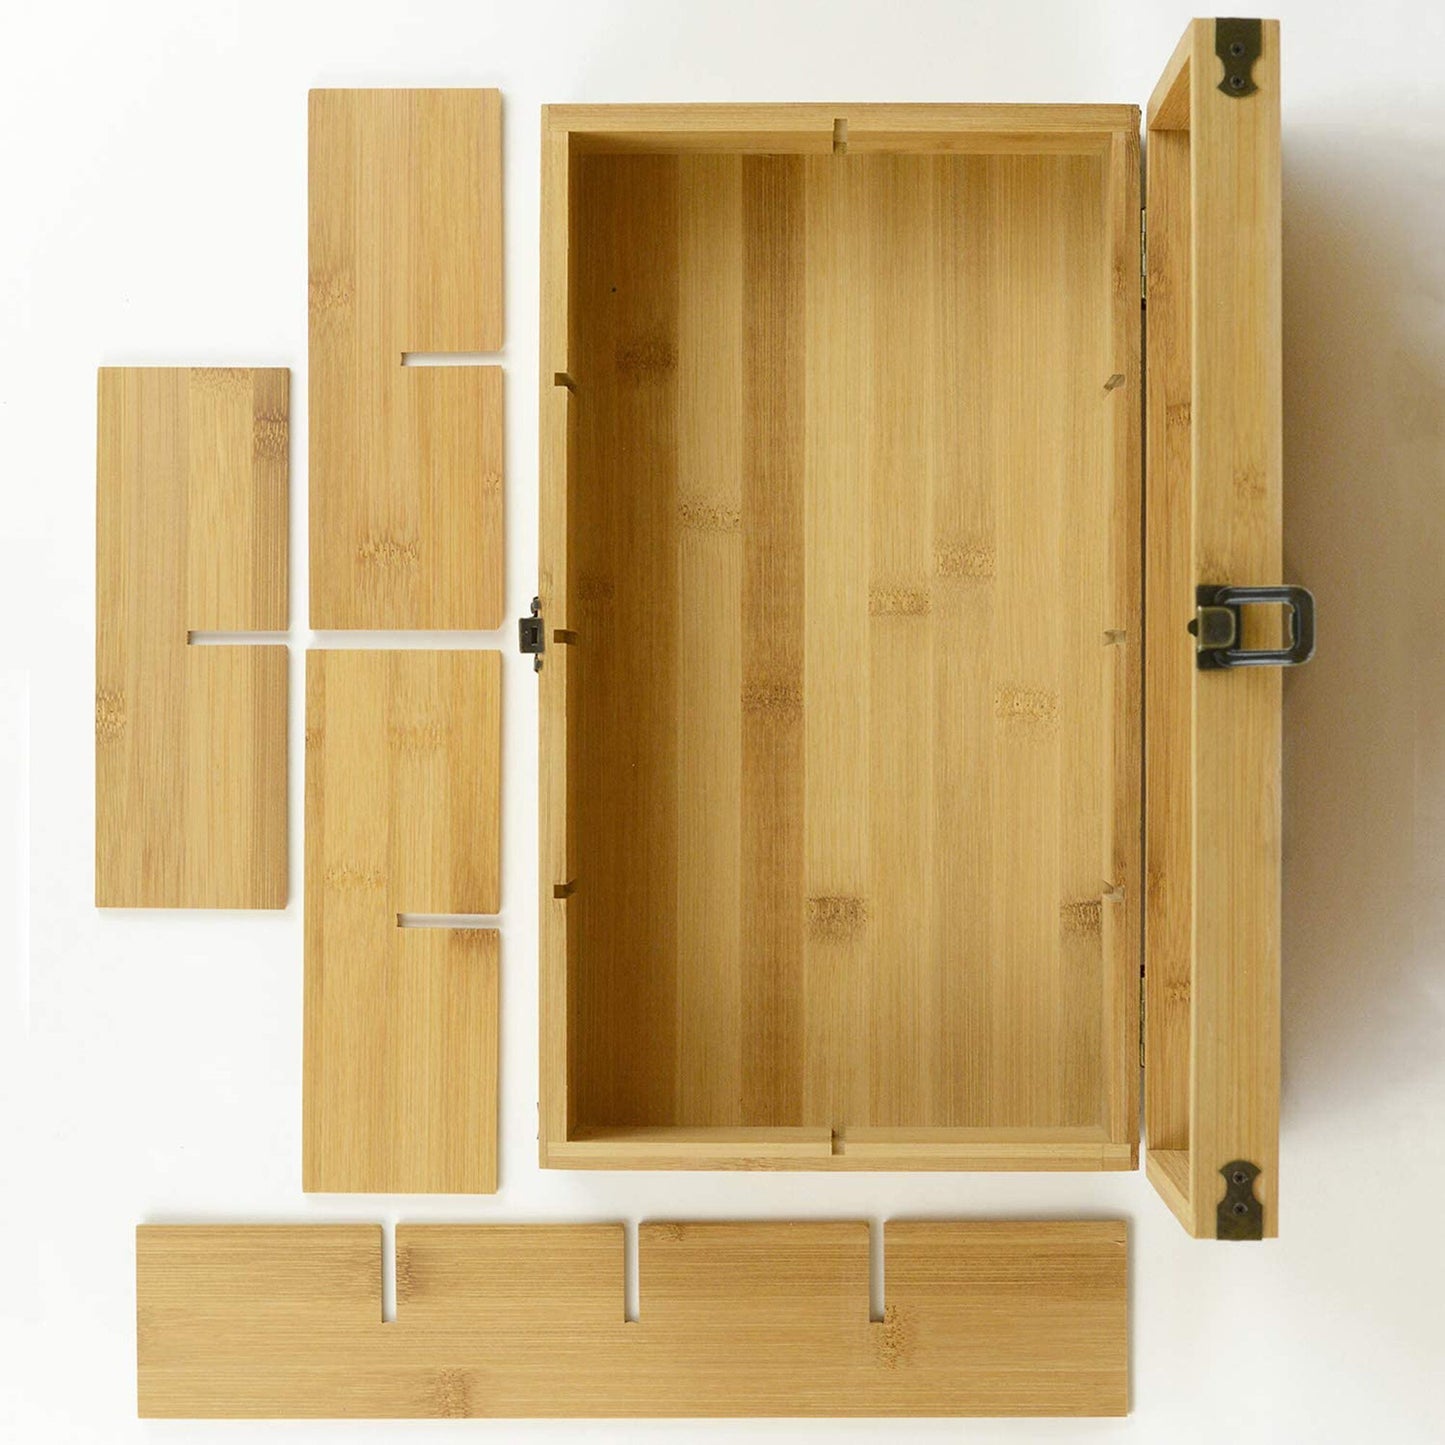 Large Wooden Tea Organizer Box, Big 14" Bamboo Storage Chest 8-Compartment Adjustable Shelves 100% Handmade Craft Eco-Friendly Natural Decor